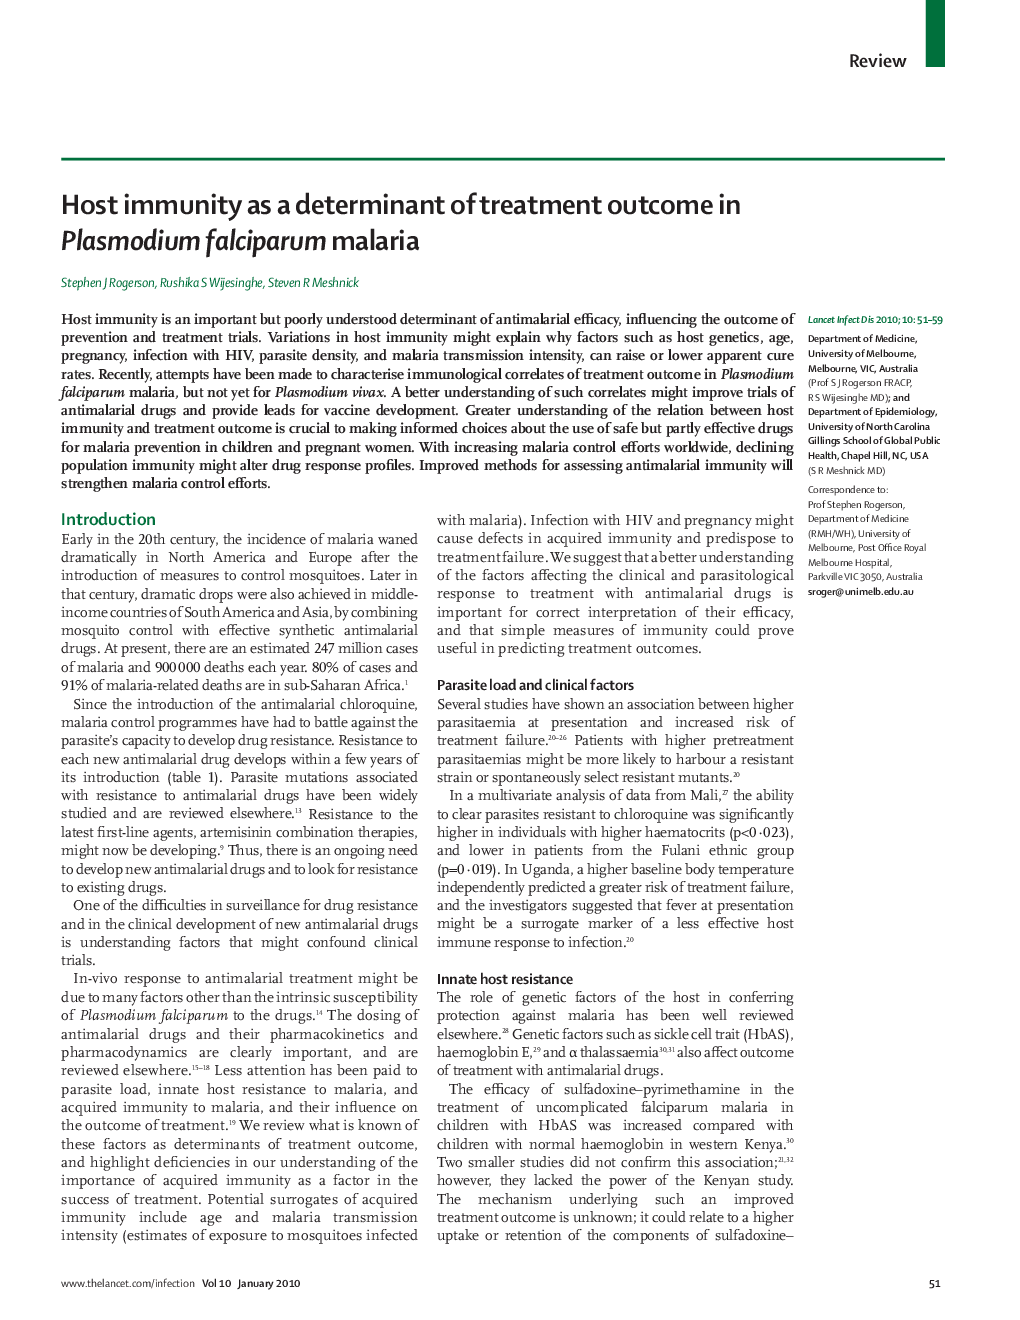 Host immunity as a determinant of treatment outcome in Plasmodium falciparum malaria